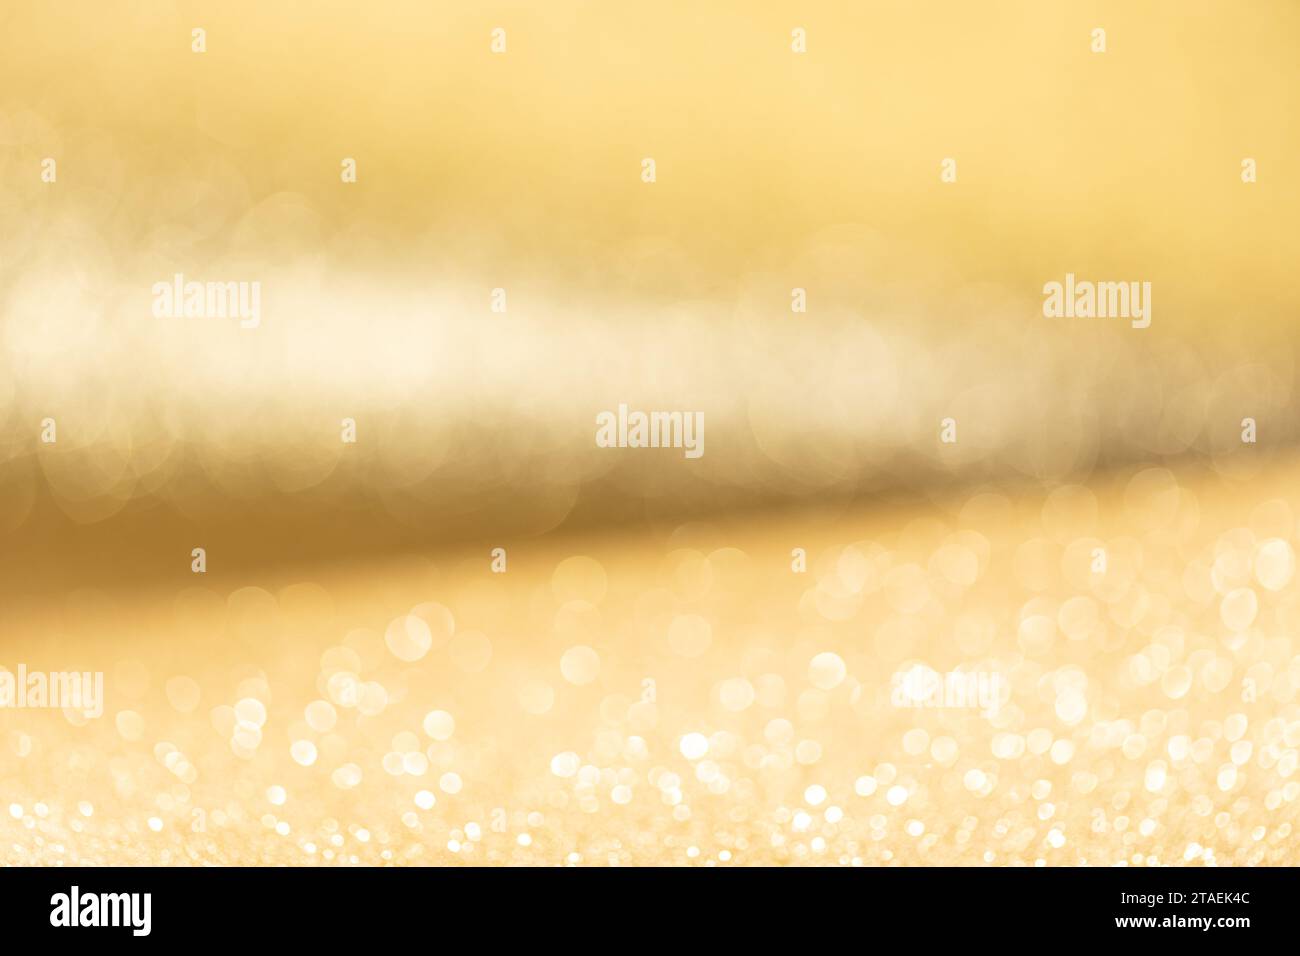 Blurry Golden Glitter Abstract Background. Full frame Stock Photo